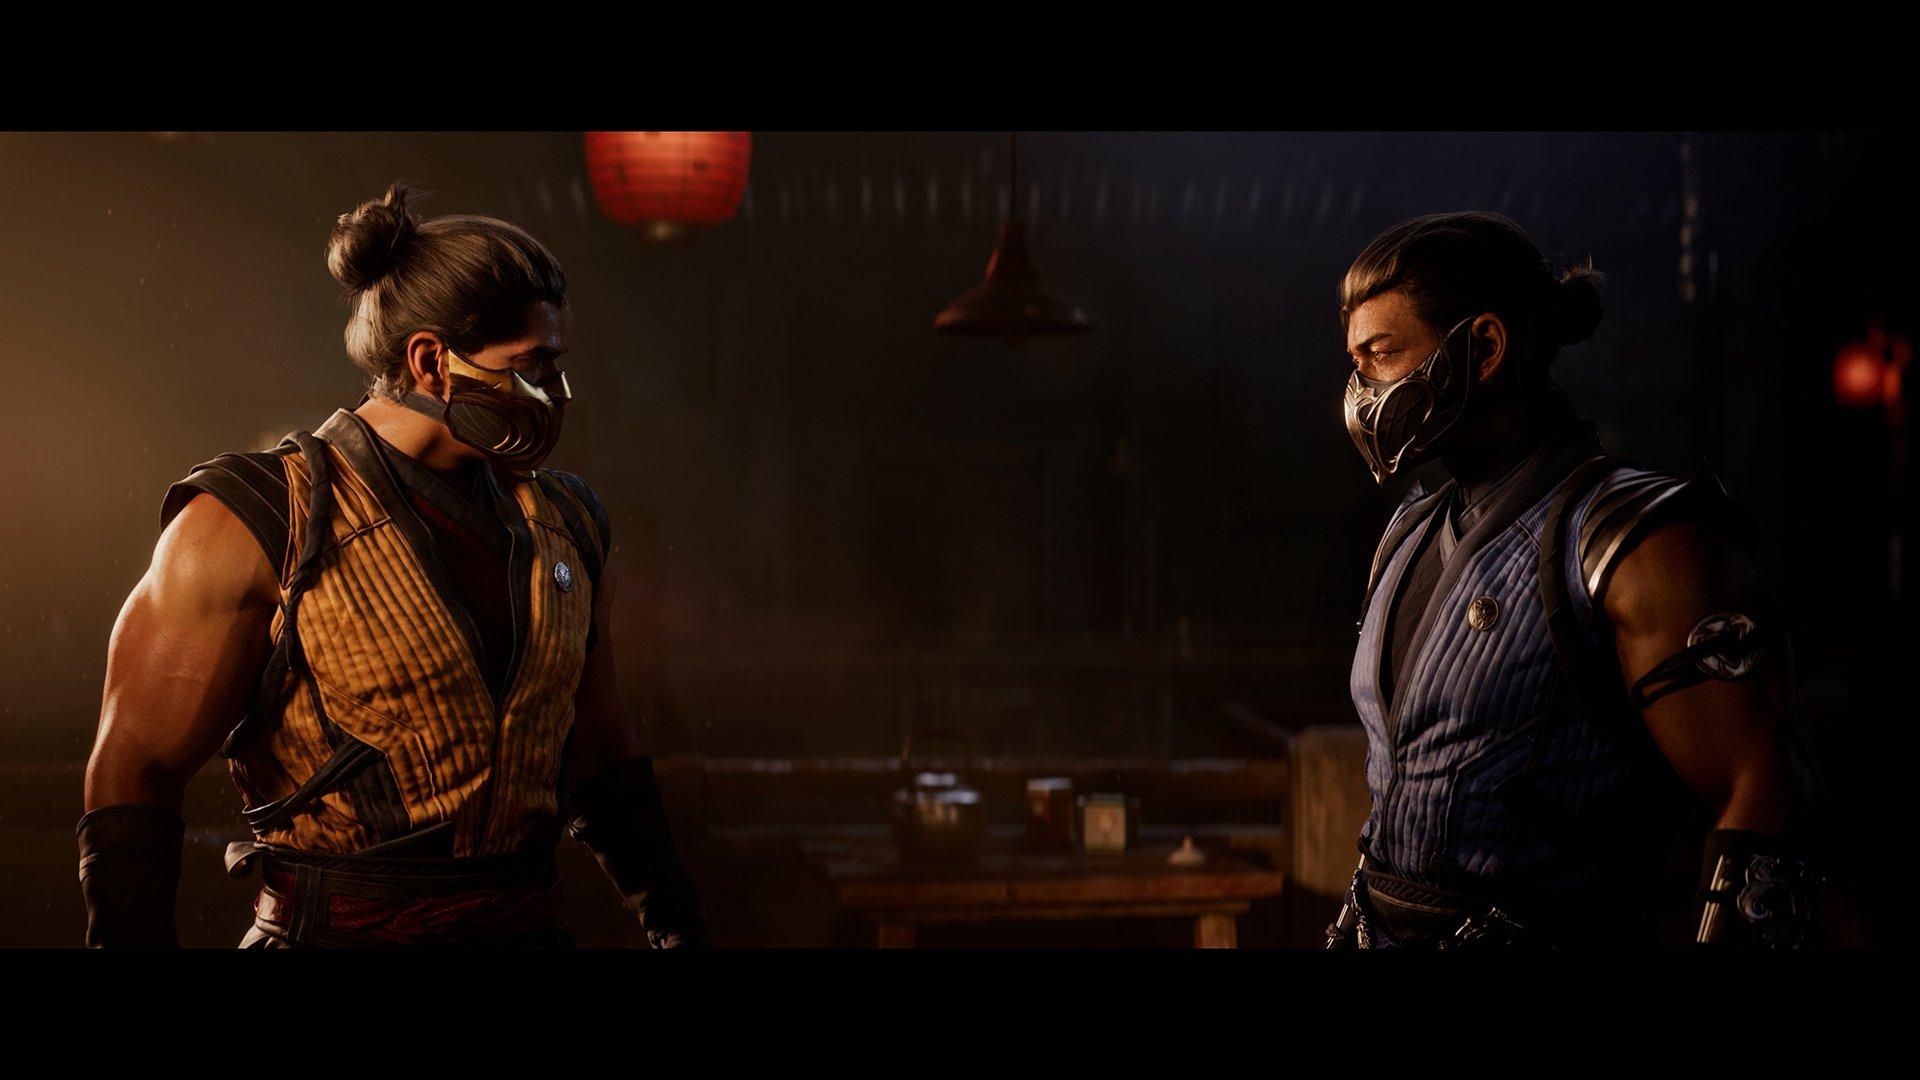 Mortal Kombat 1 Kollectors Edition - Xbox Series X